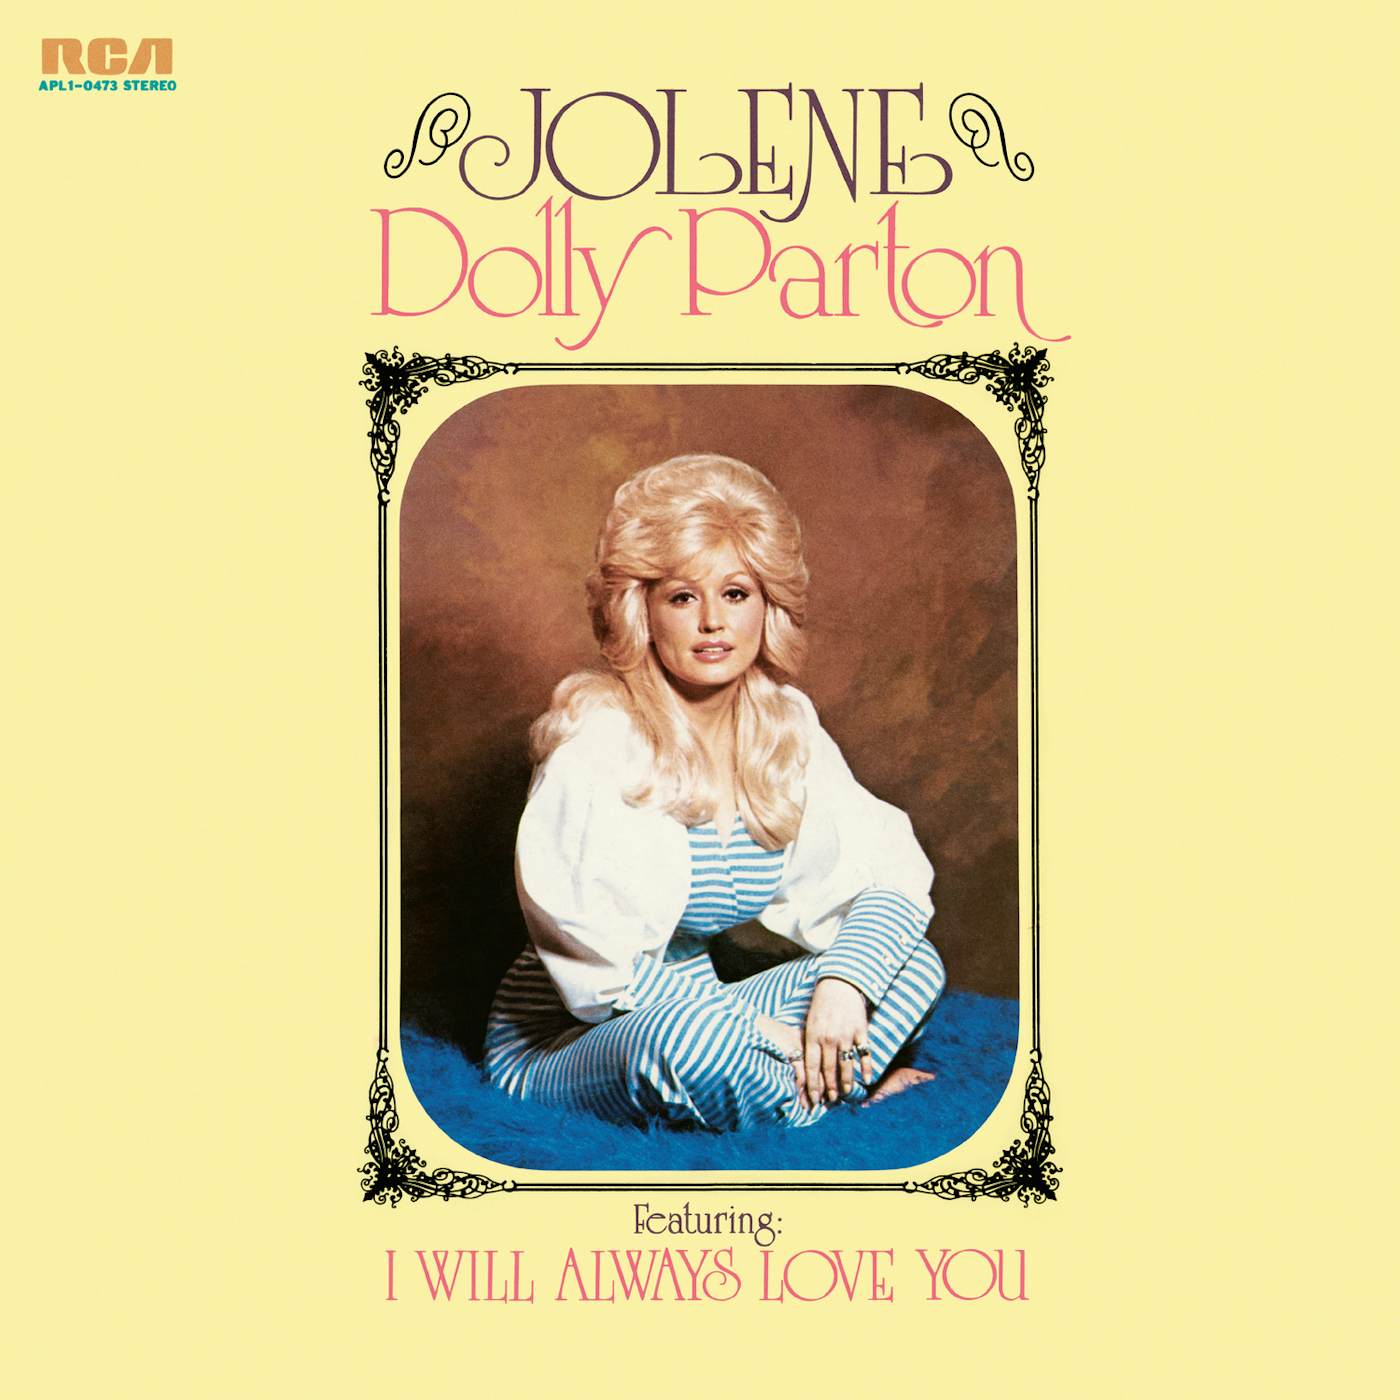 Dolly Parton Jolene Vinyl Record